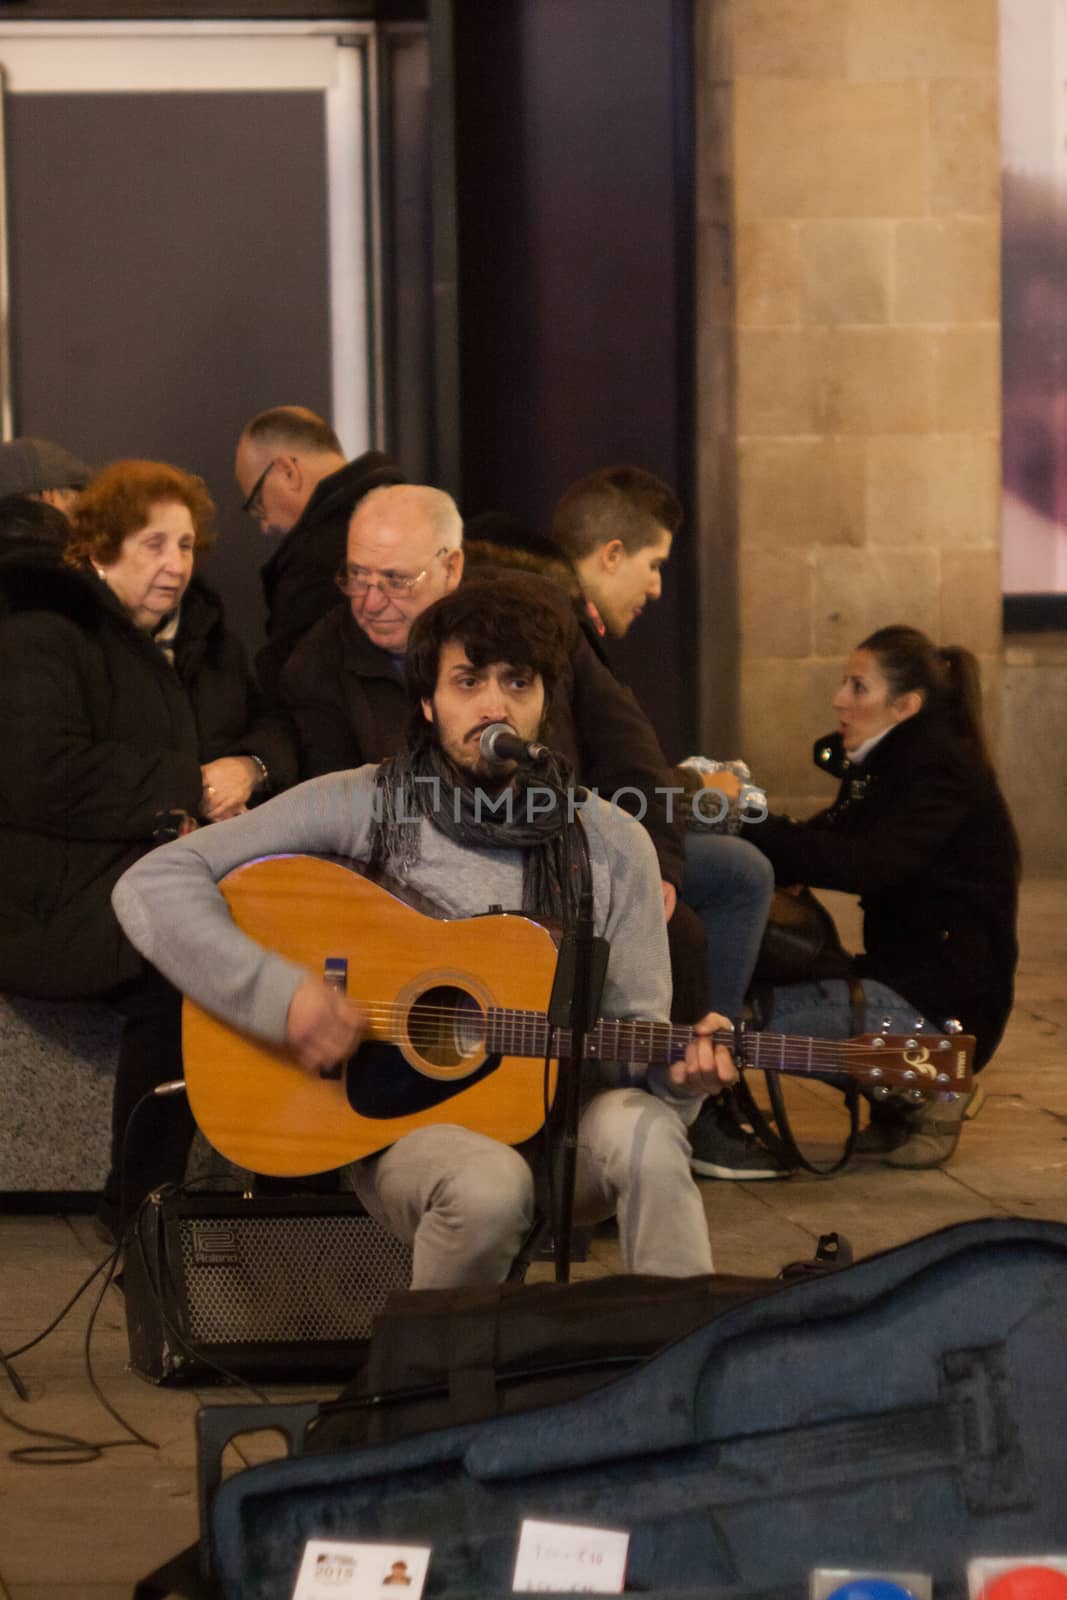 Barcelona, Spain, March 2016: street musician perform on street